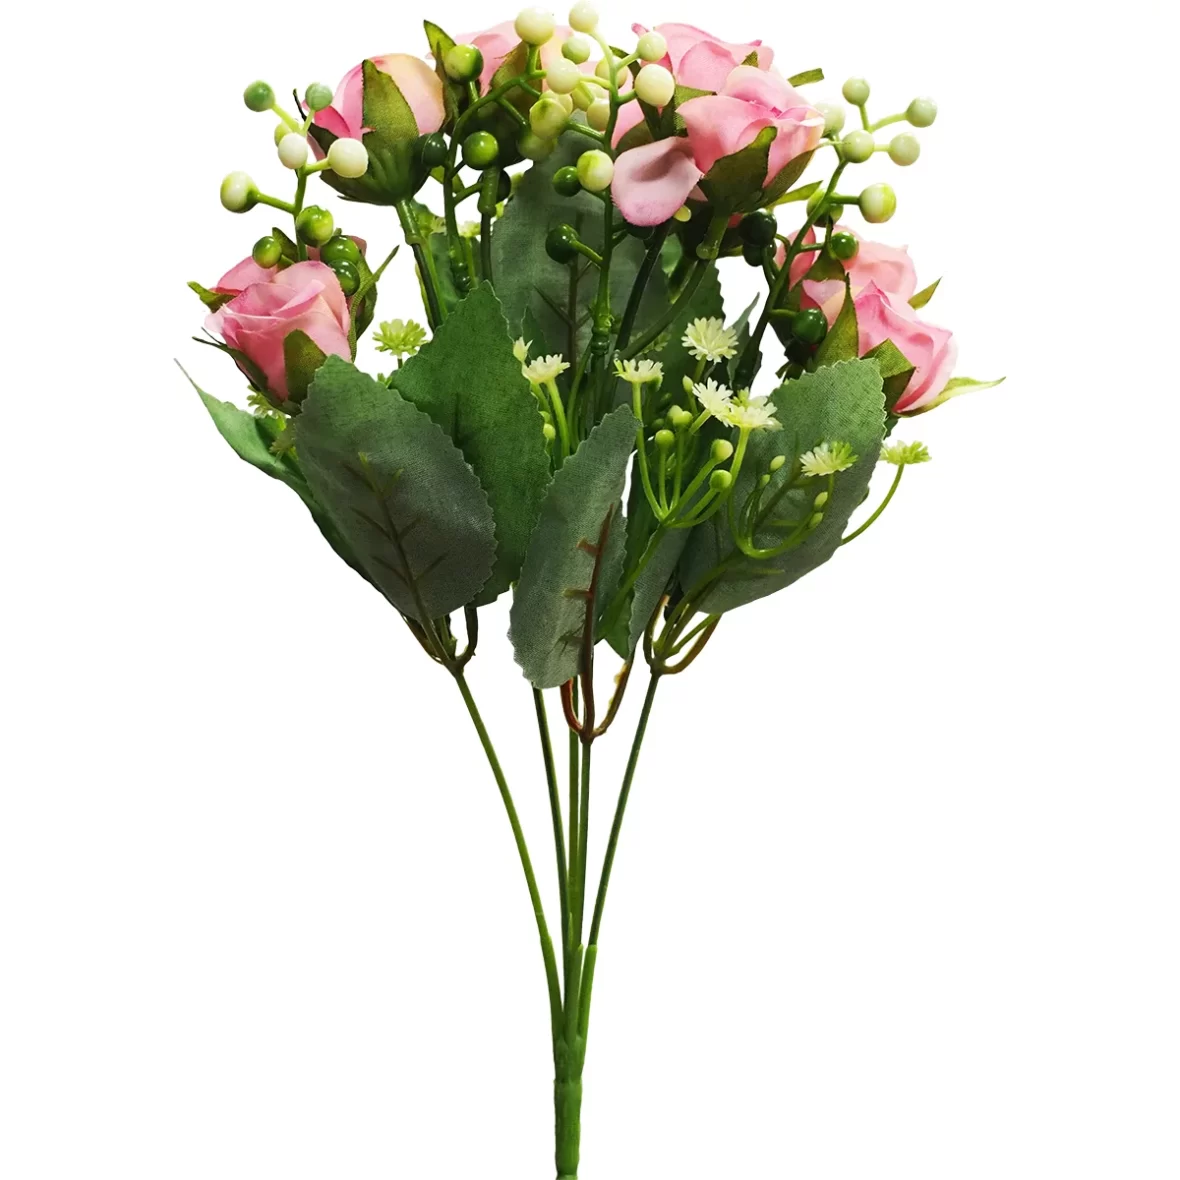 Buchet flori artificiale, model Trandafiri Roz cu Lacramioare, 30 cm